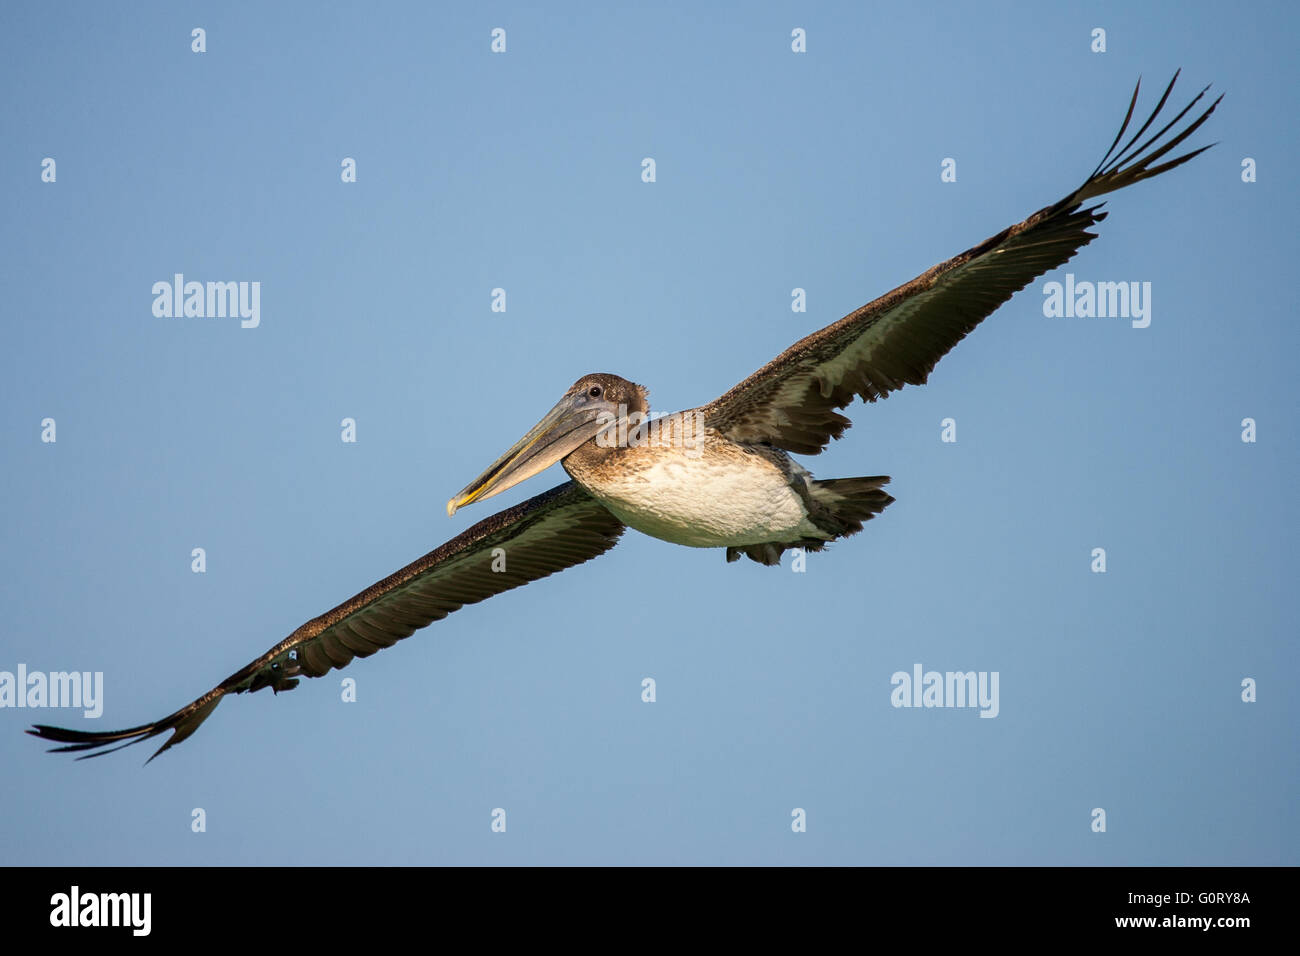 A brown pelican in flight Stock Photo